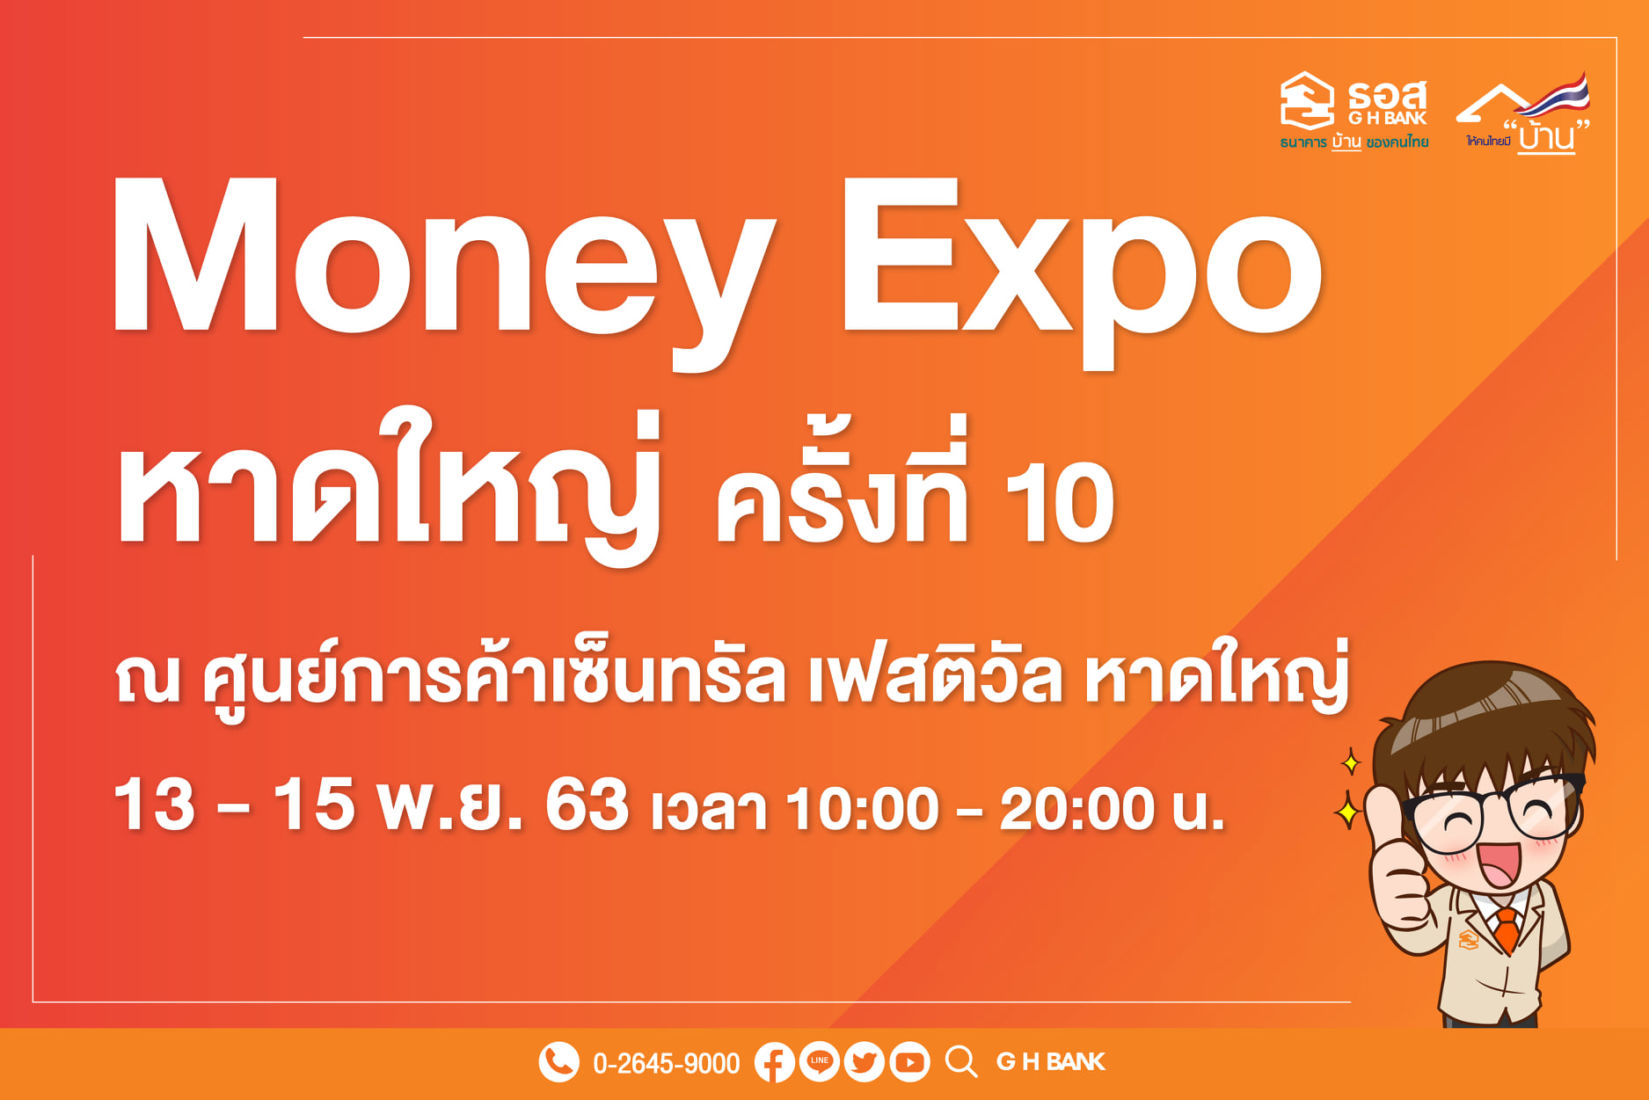 Money Expo หาดใหญ่ ครั้งที่ 10